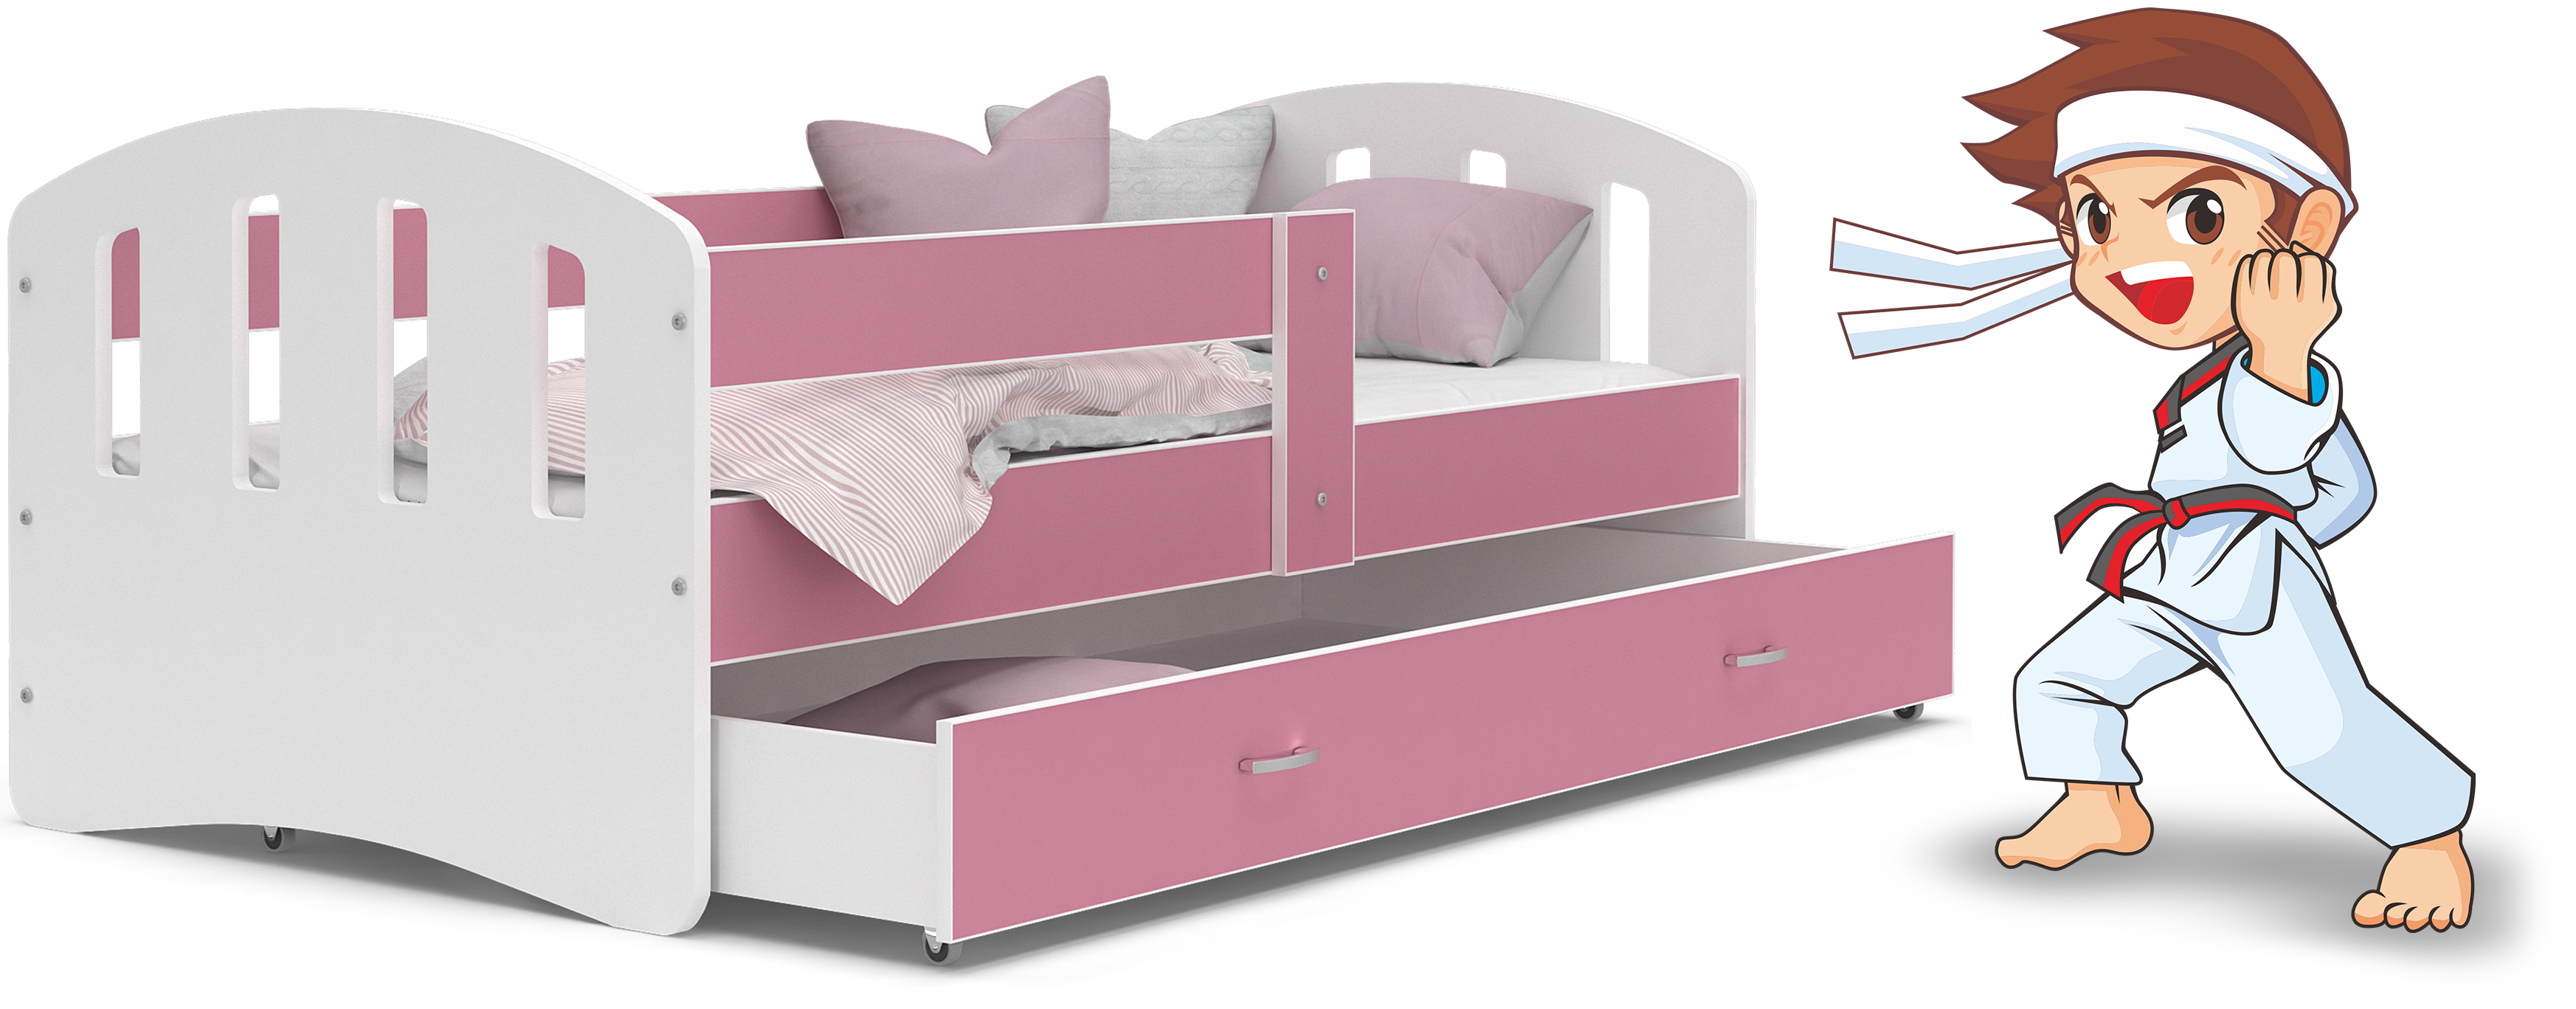 Dětská postel s šuplíkem a zábranama | Bezpečná postel pro děti | Postel pro děti | Postel se zábranama